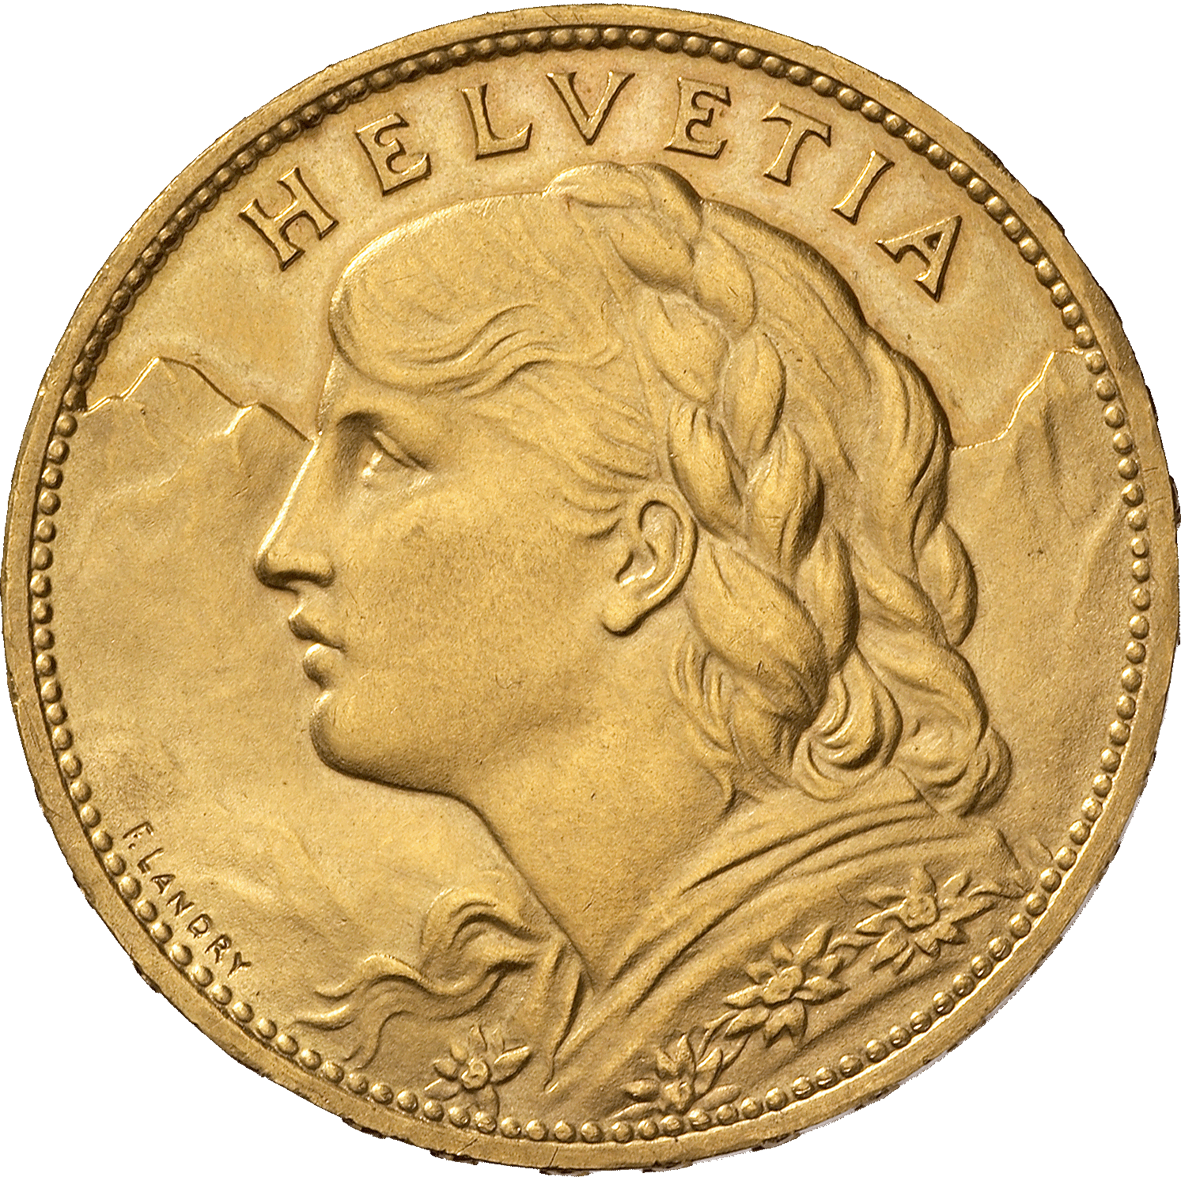 Swiss Confederation, 100 Francs (Vreneli) 1925 (obverse)